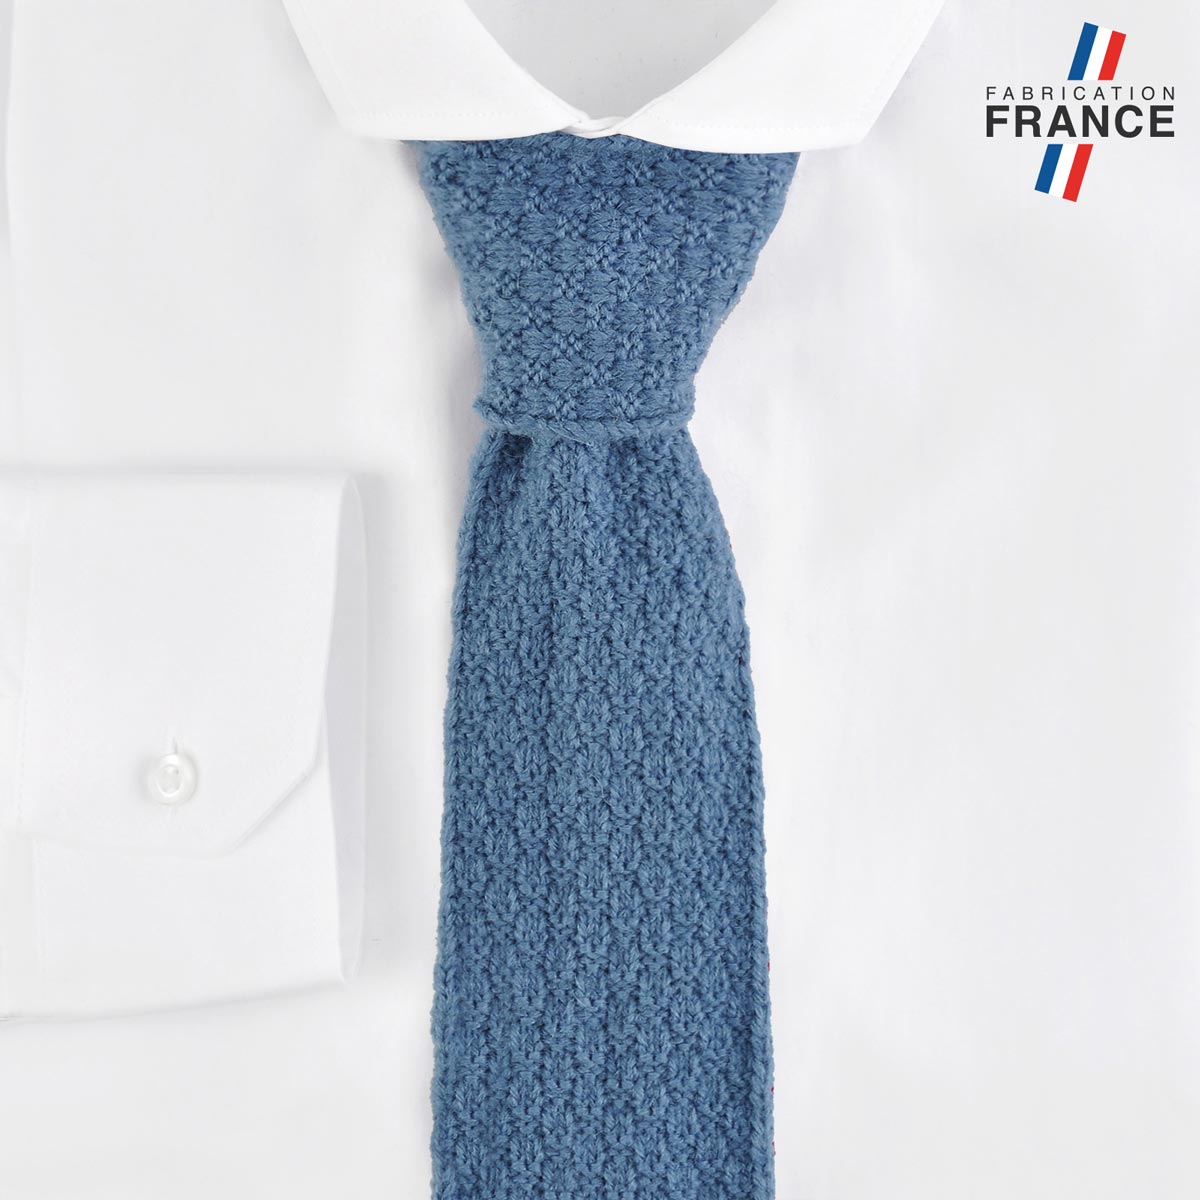 CV-00461_F12-2FR_Cravate-tricot-bleu-clair-fabrication-francaise